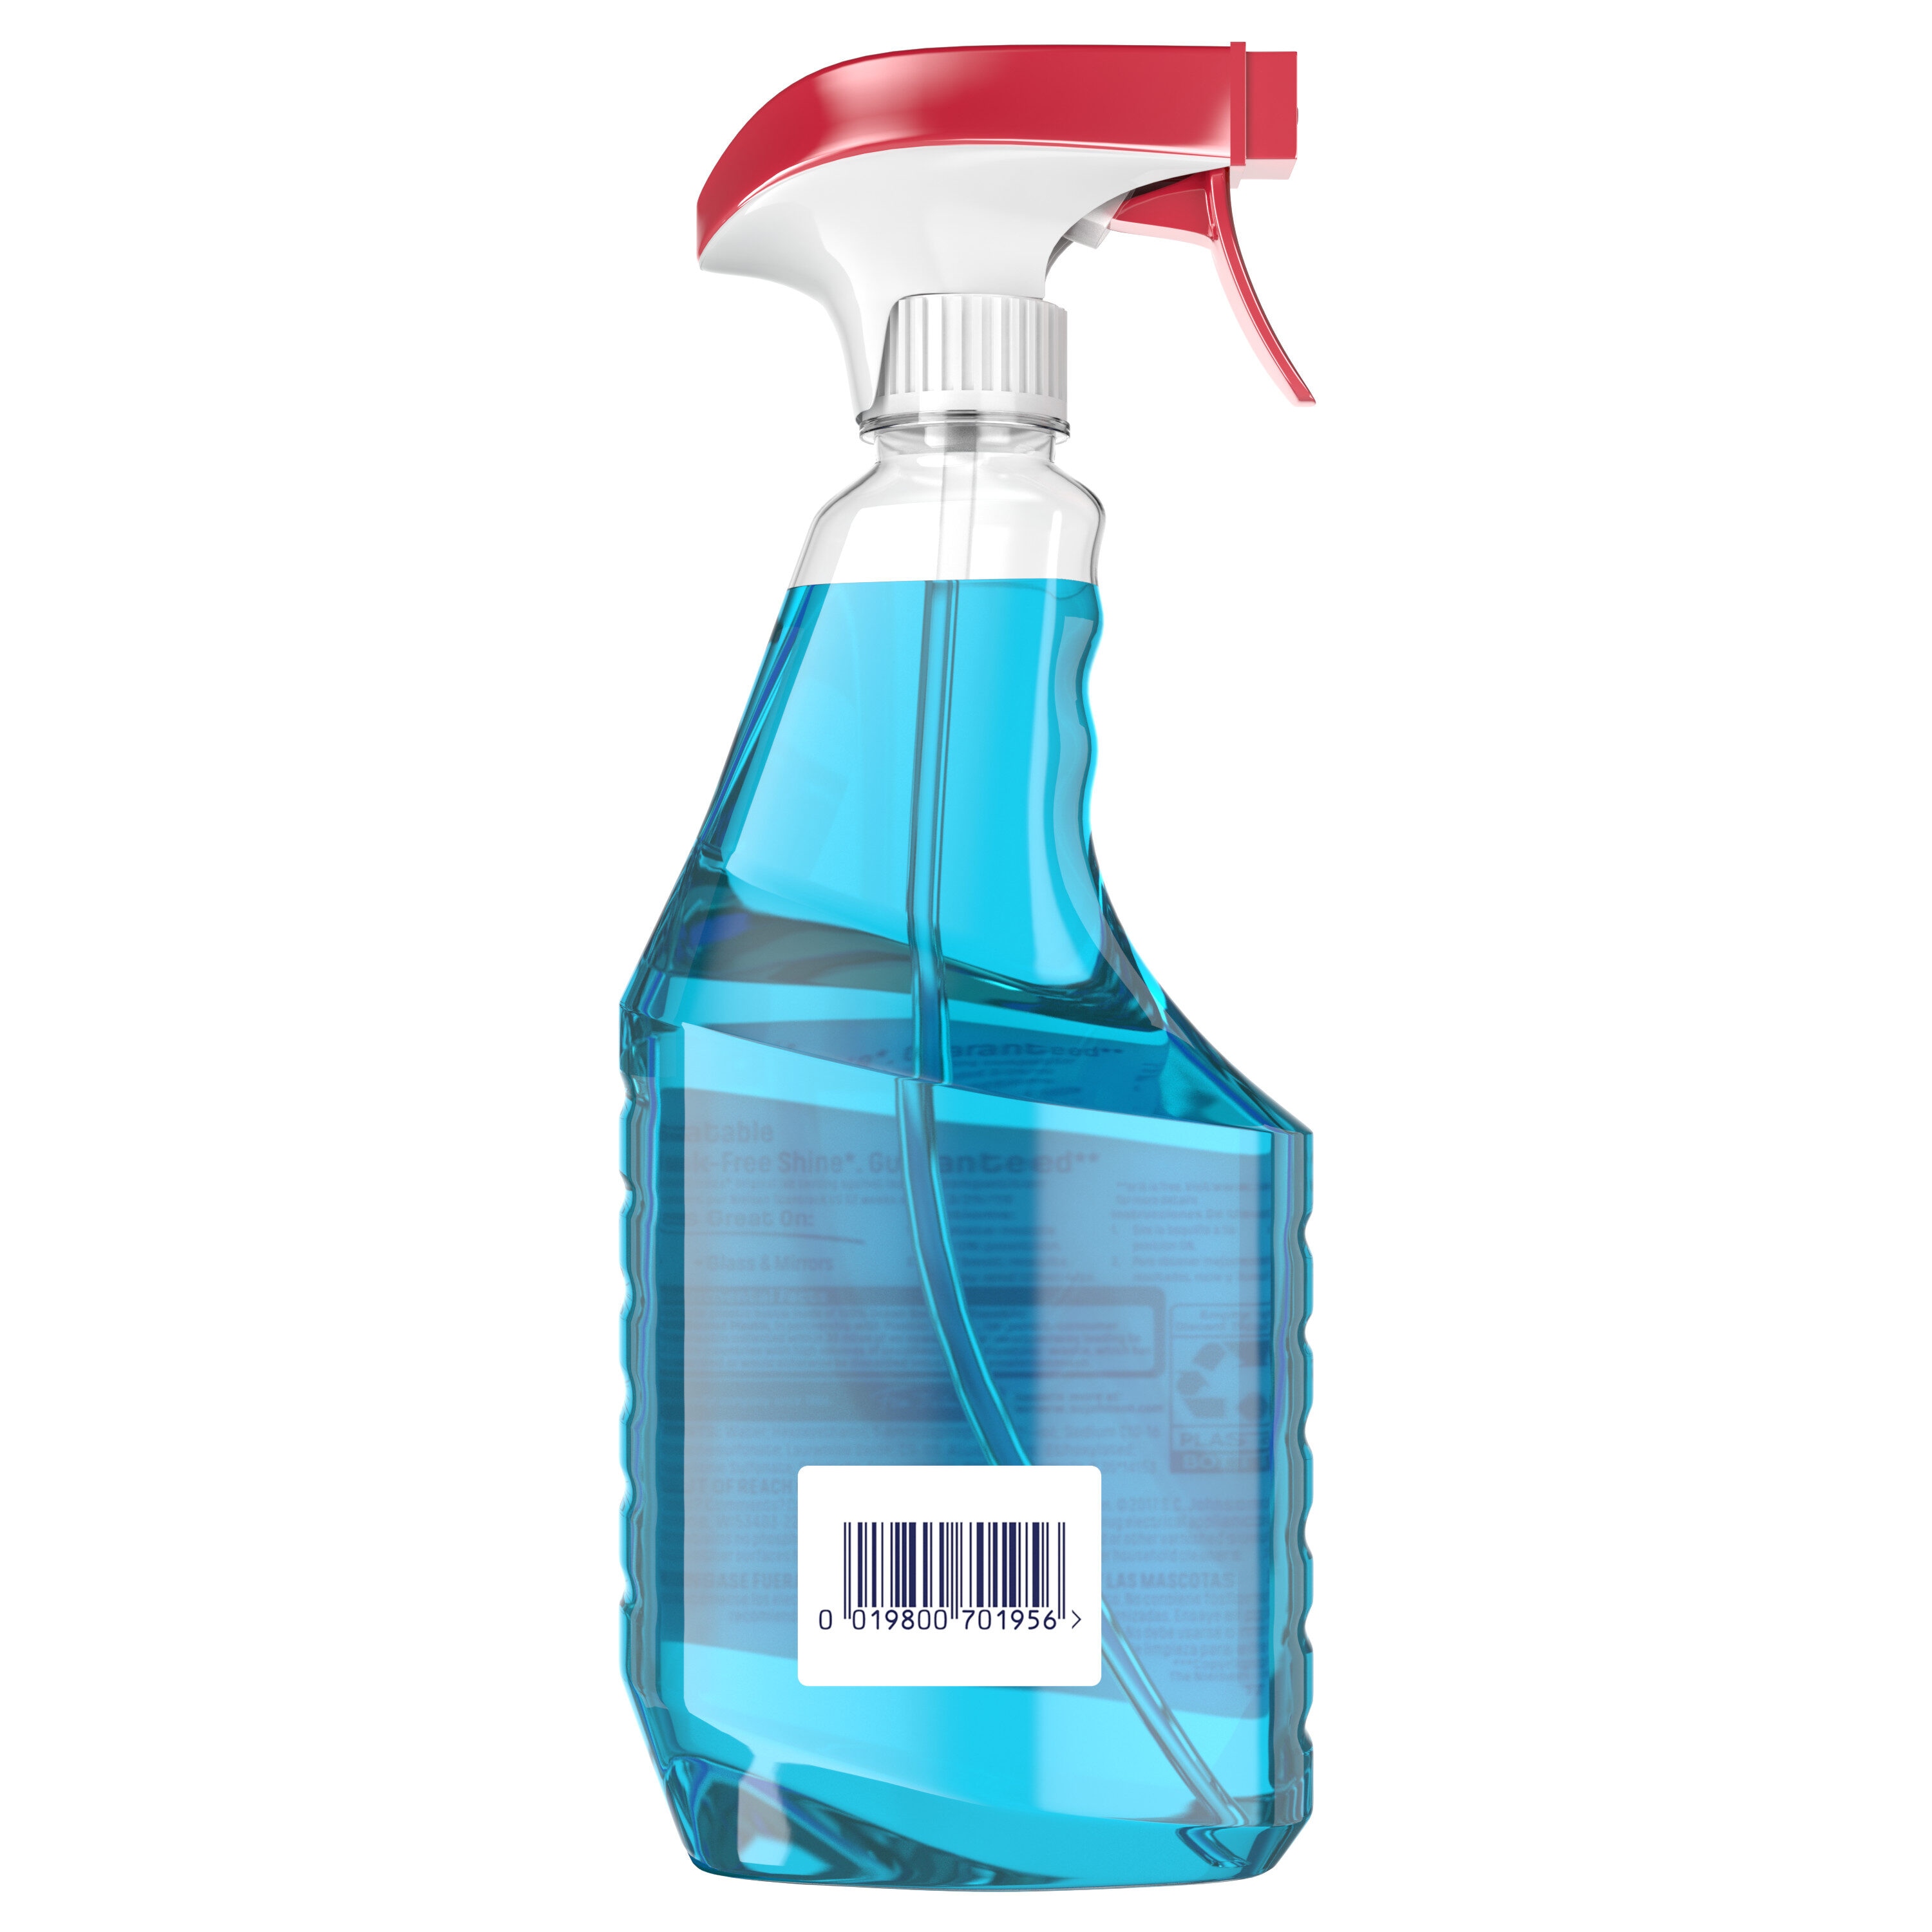 Windex Original 23-fl oz Pump Spray Glass Cleaner in the Glass